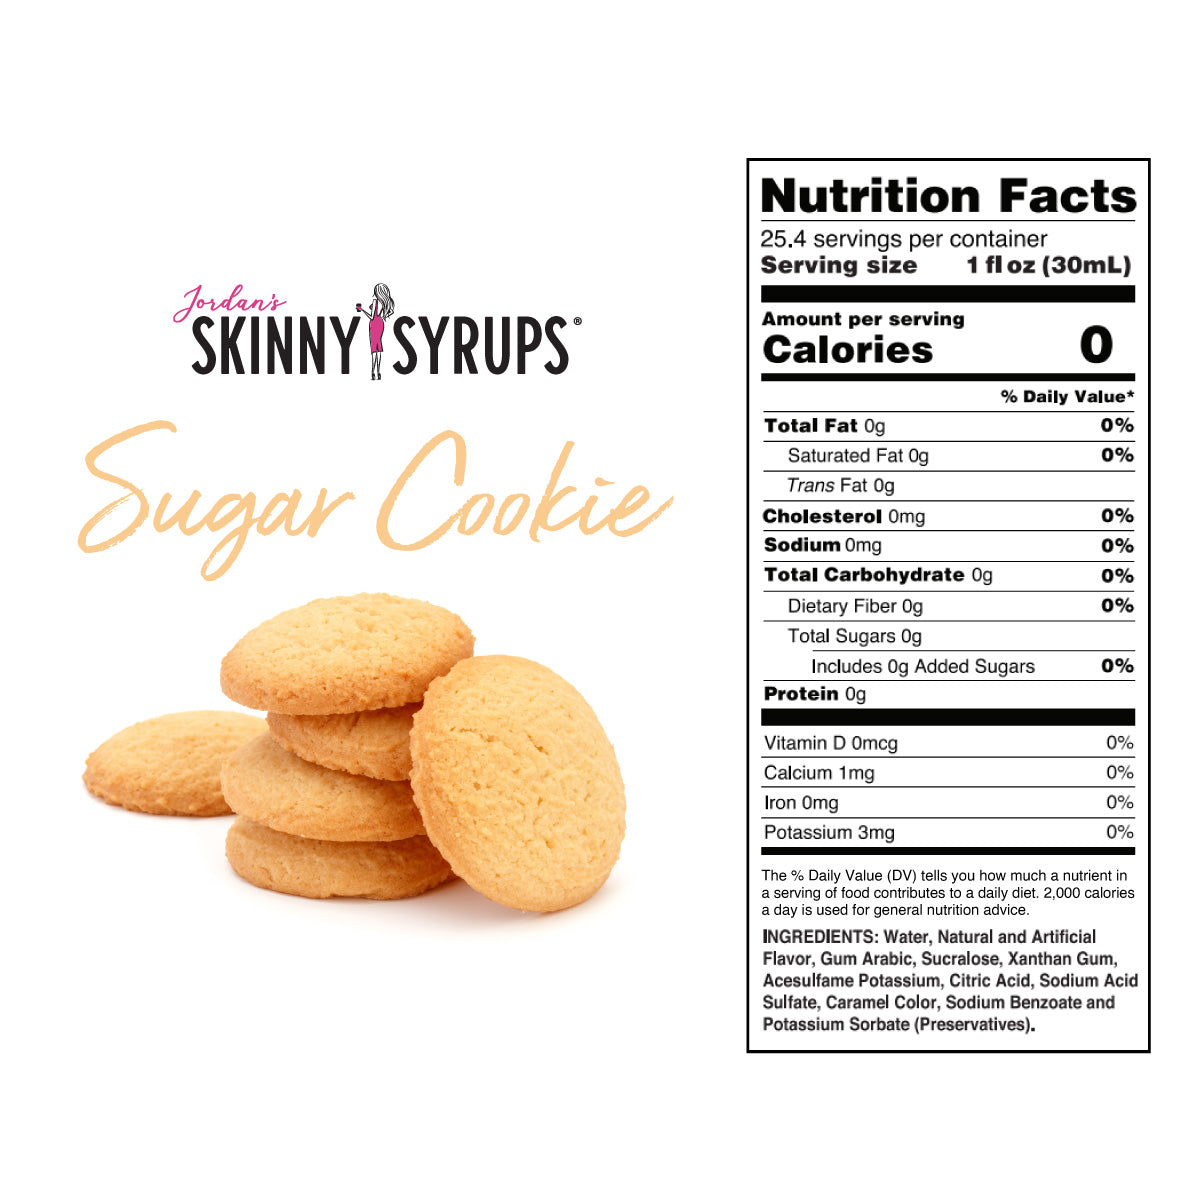 Sugar Free Sugar Cookie - Skinny Mixes